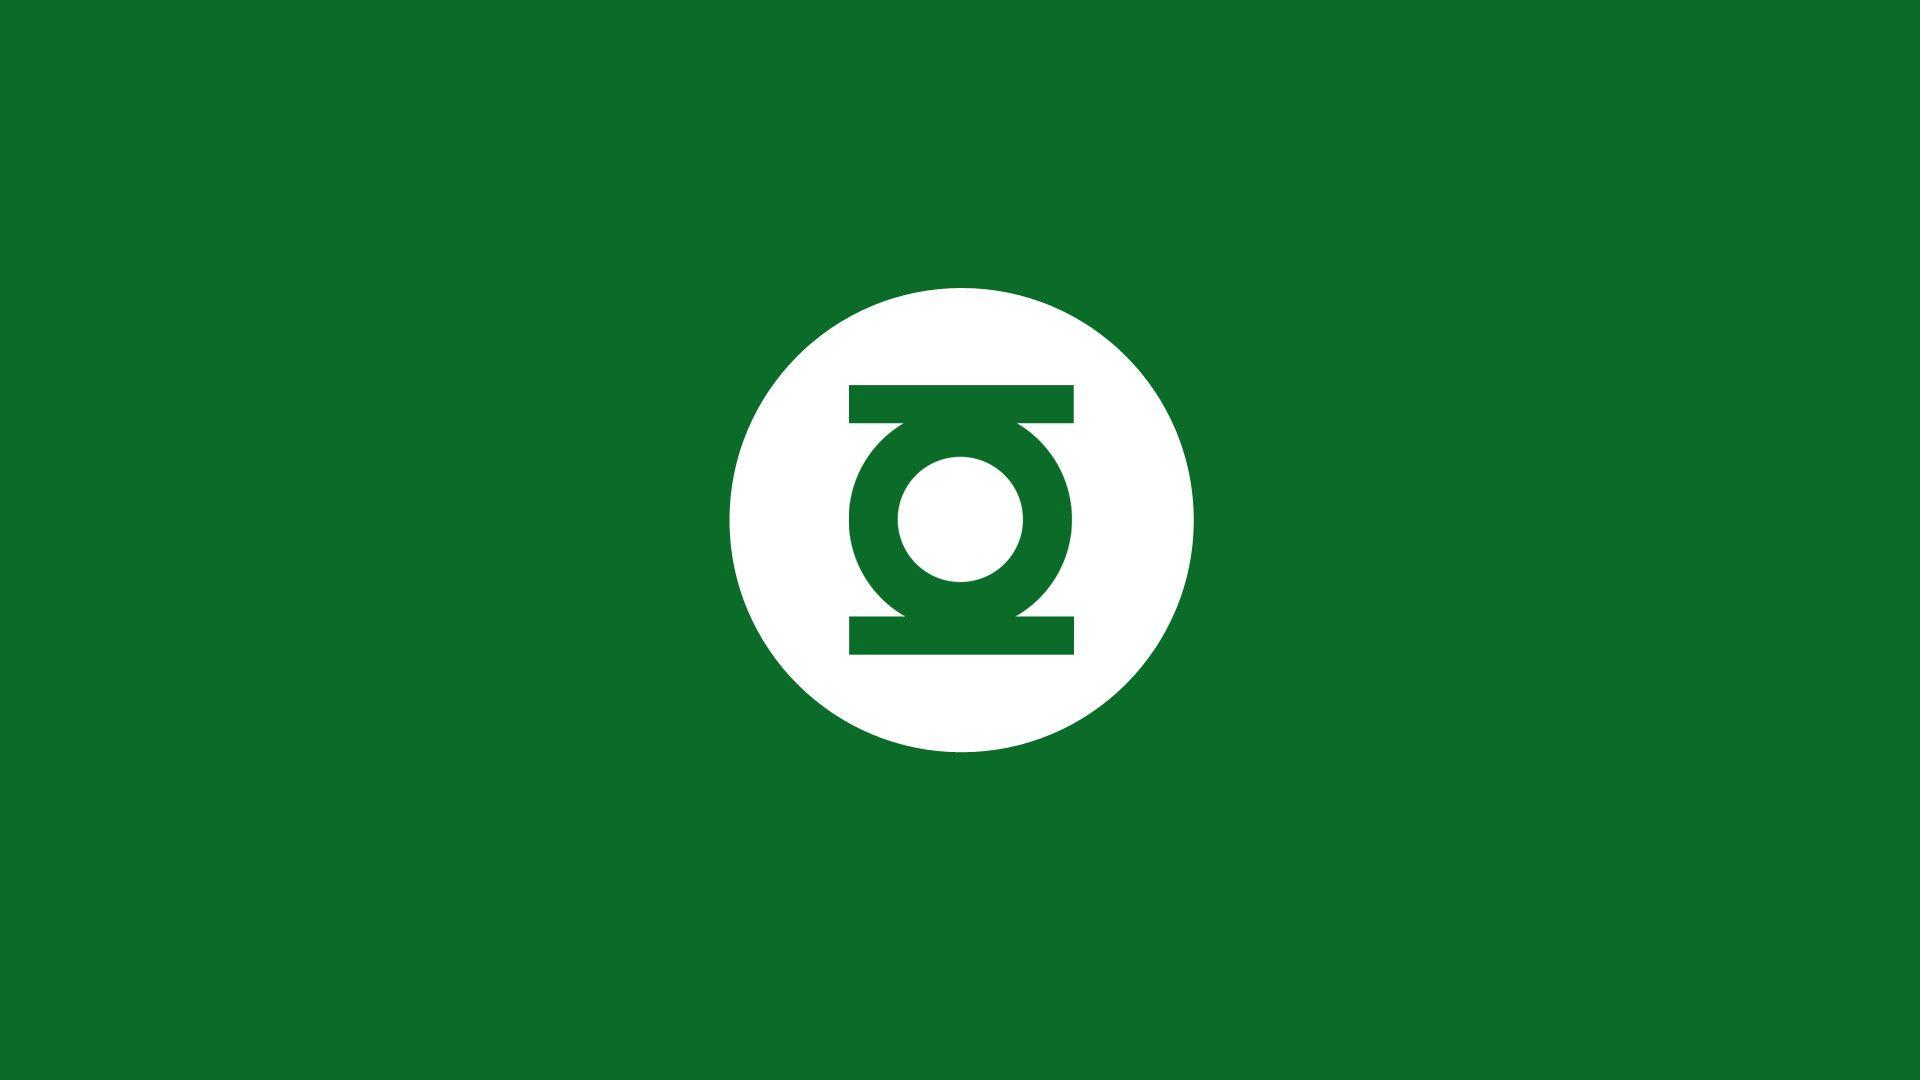 Green Lantern Logo Wallpaper